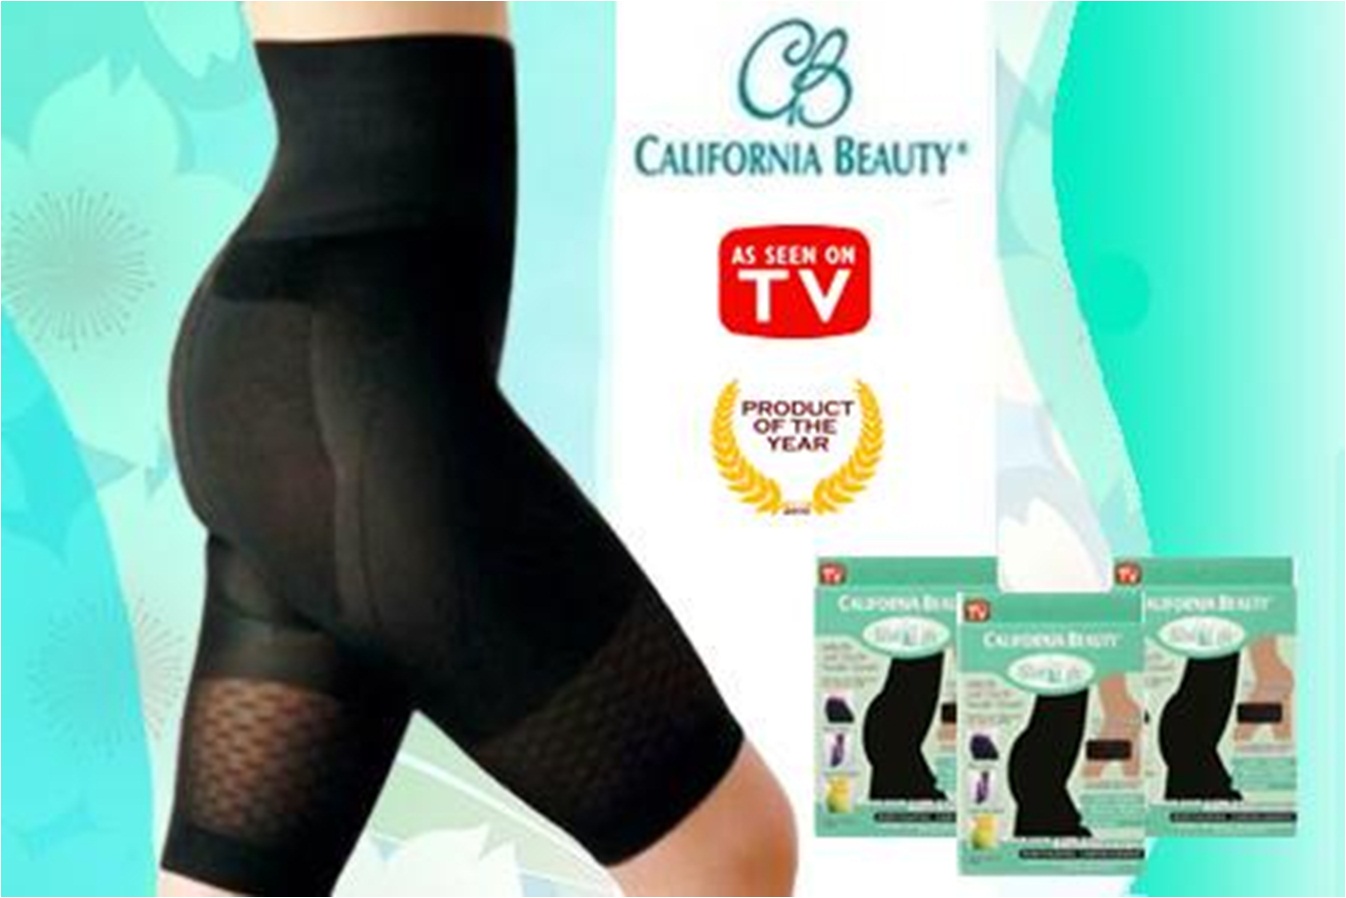 Slim n Lift California Beauty Bodyshaper Undergarment – mycookwareshop